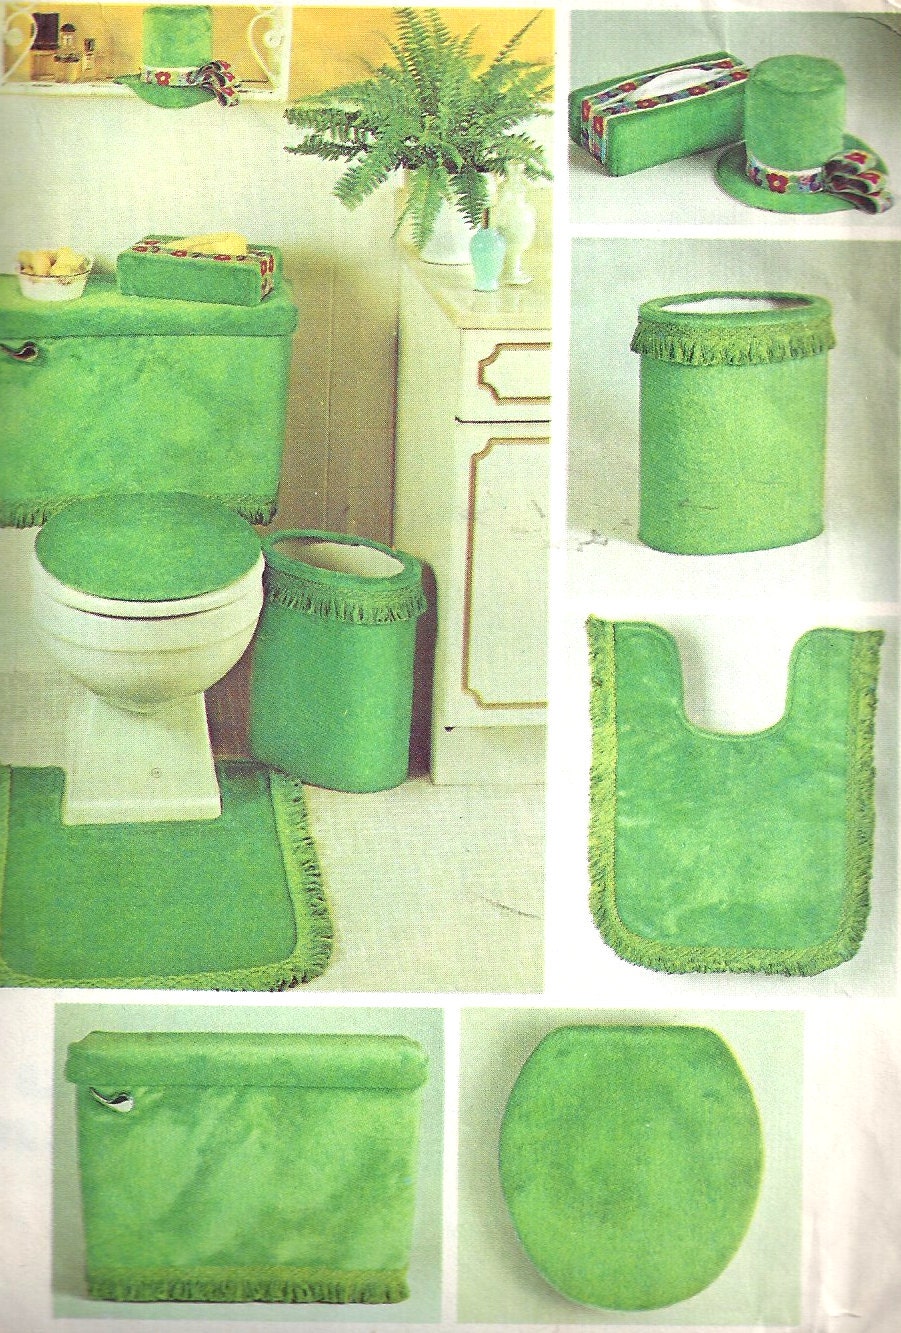 Bathroom Set Pattern 1970s Decorator Toilet Tank Tissue Toilet